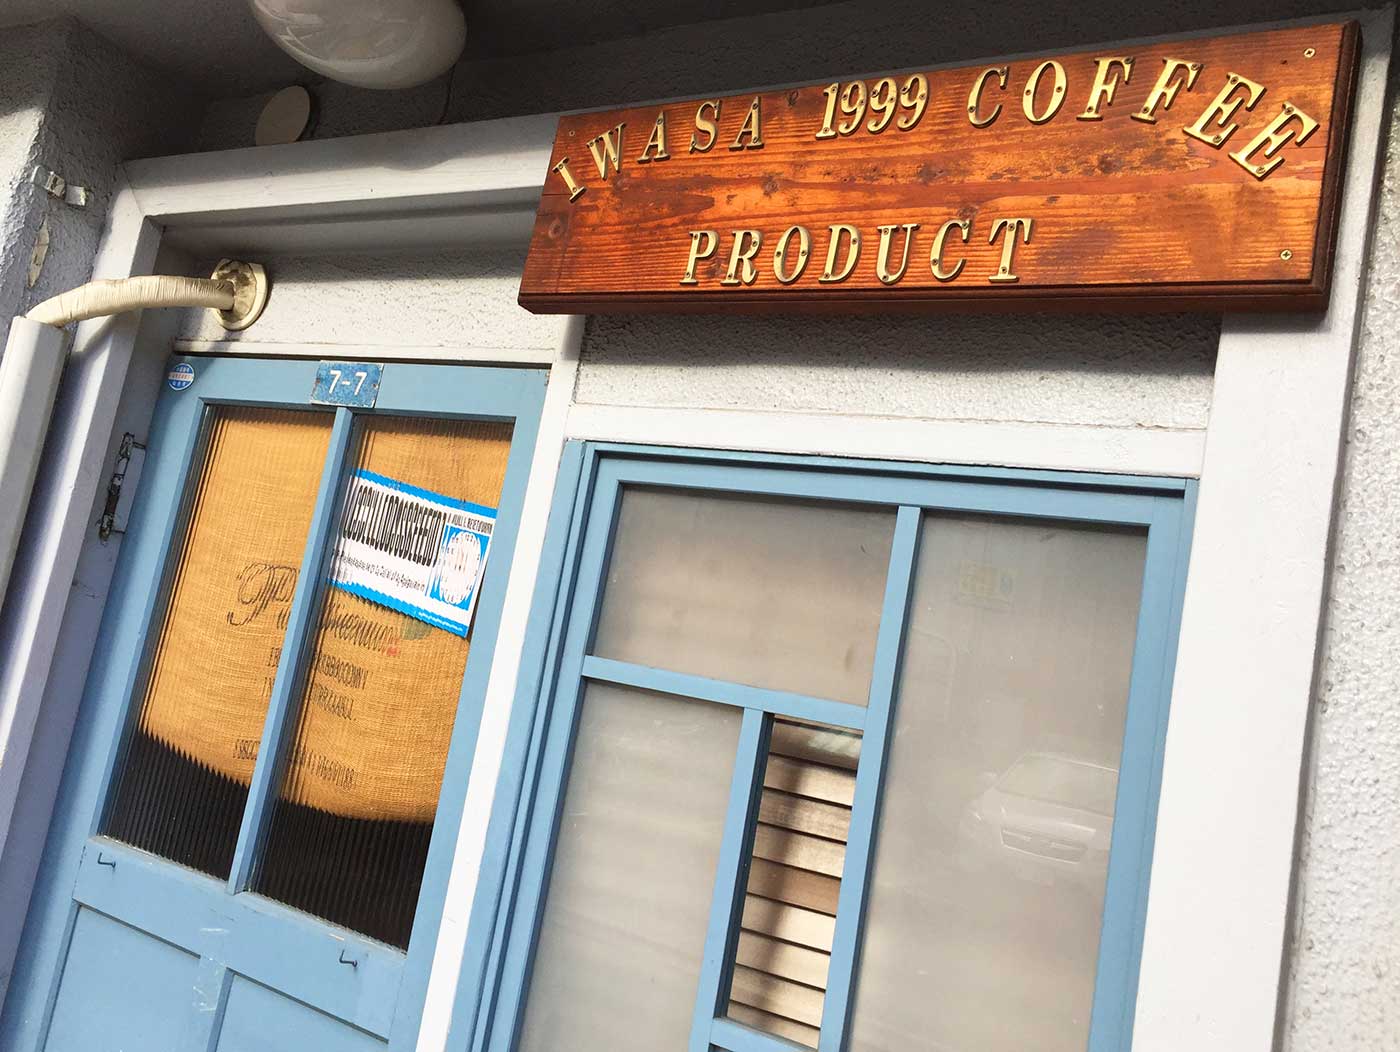 IWASA COFFEE PRODUCT